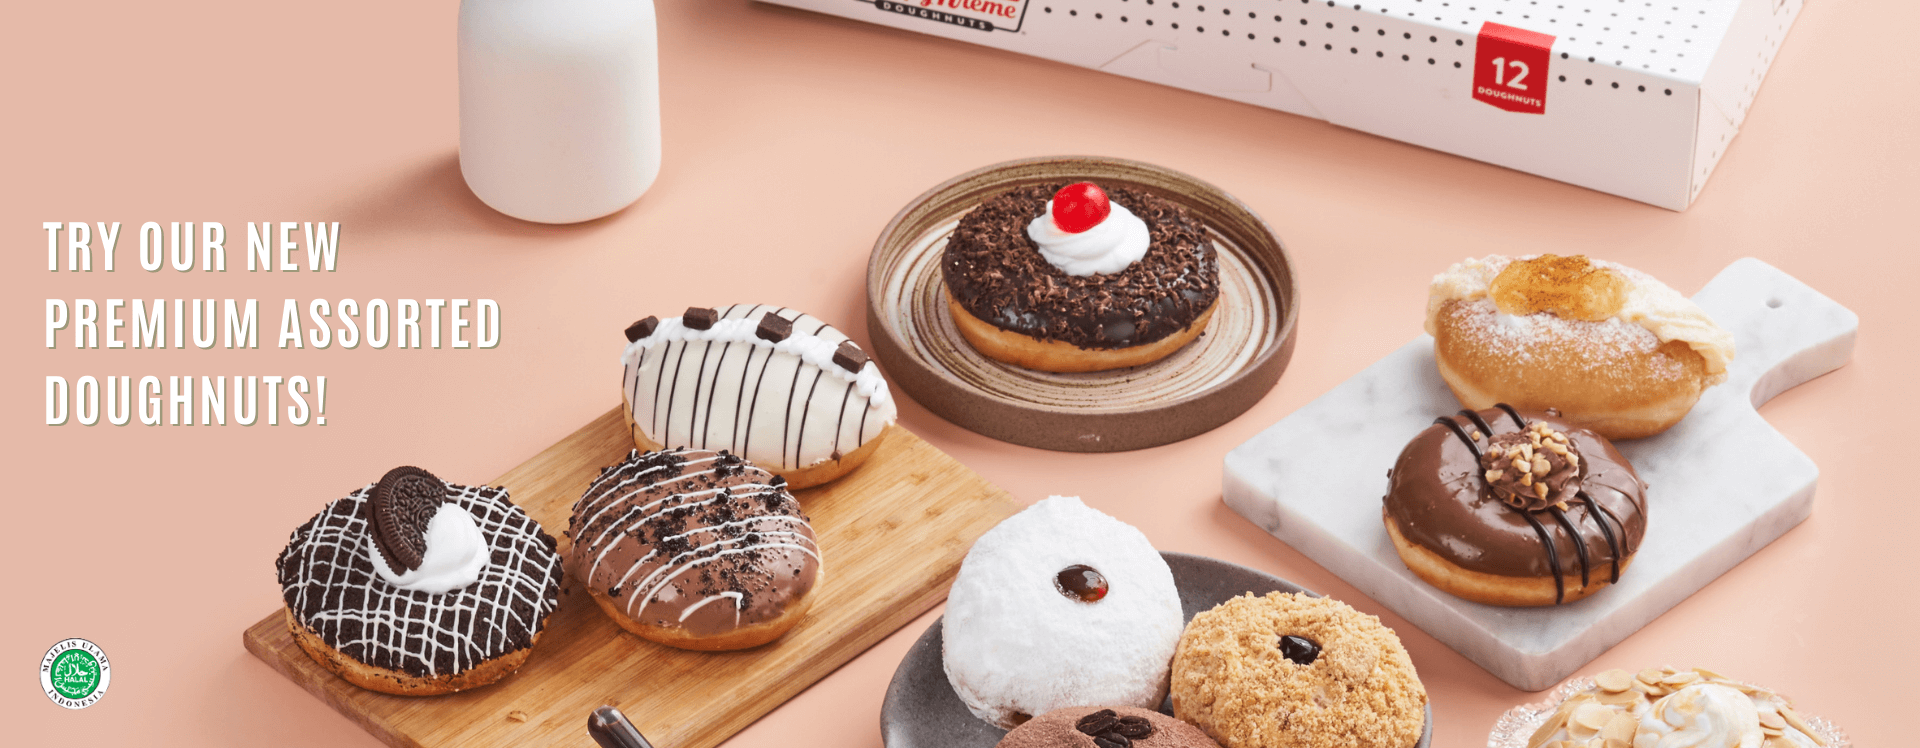 new-PREMIUM-VARIANTS-of-Krispy-Kreme-Assorted-doughnuts-slider